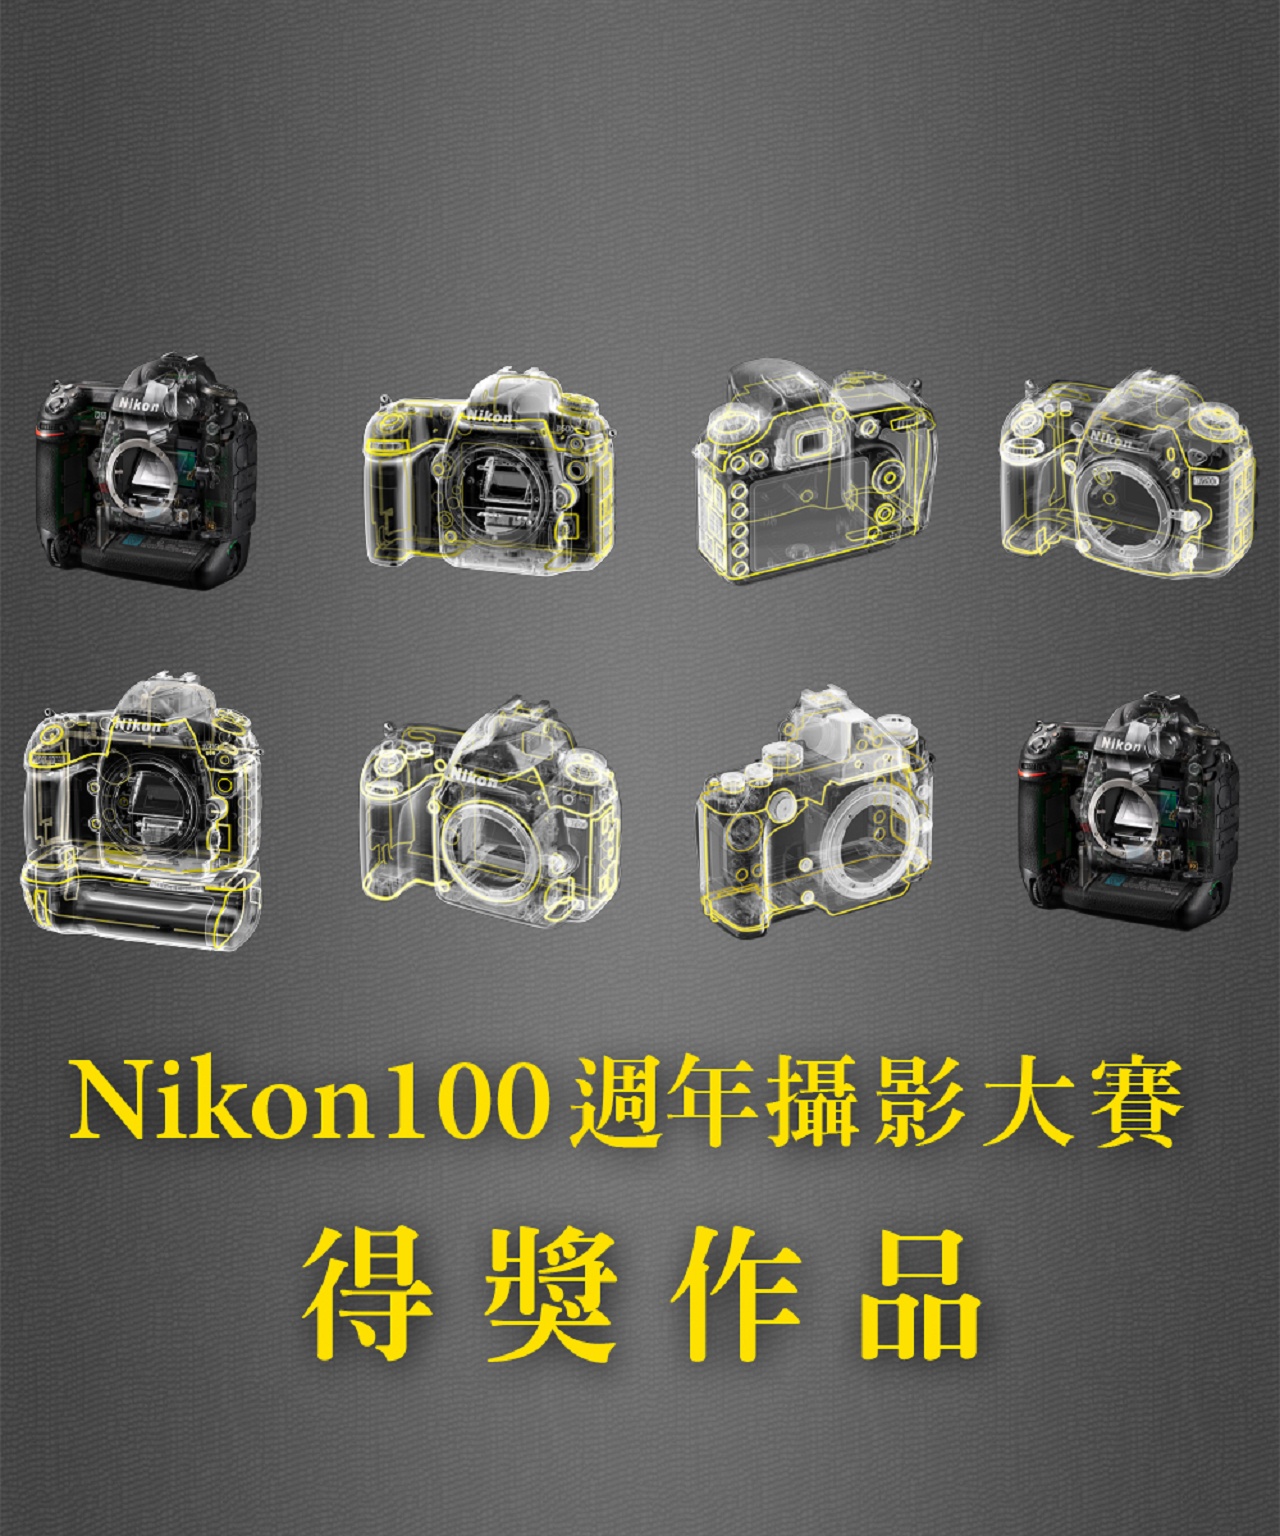 Nikon 100週年攝影大賽 得獎作品